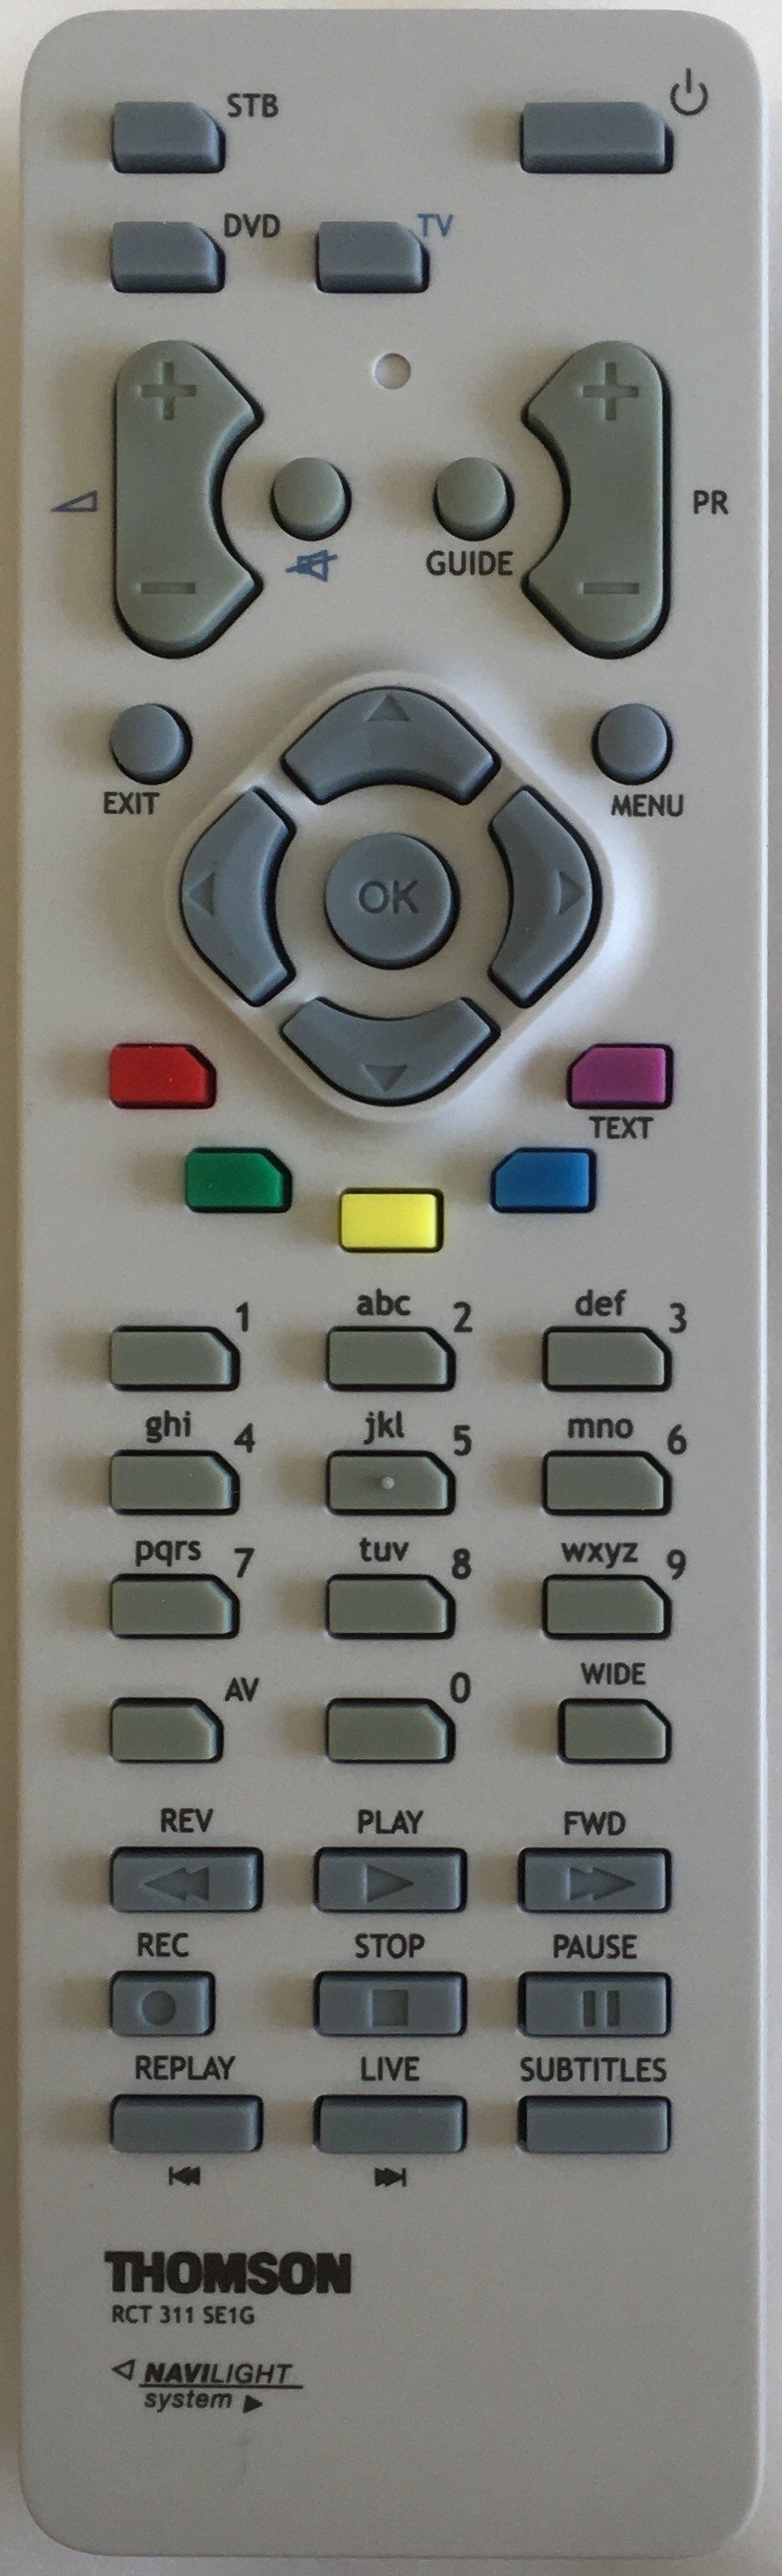 THOMSON RCT311SE1G Remote Control Original